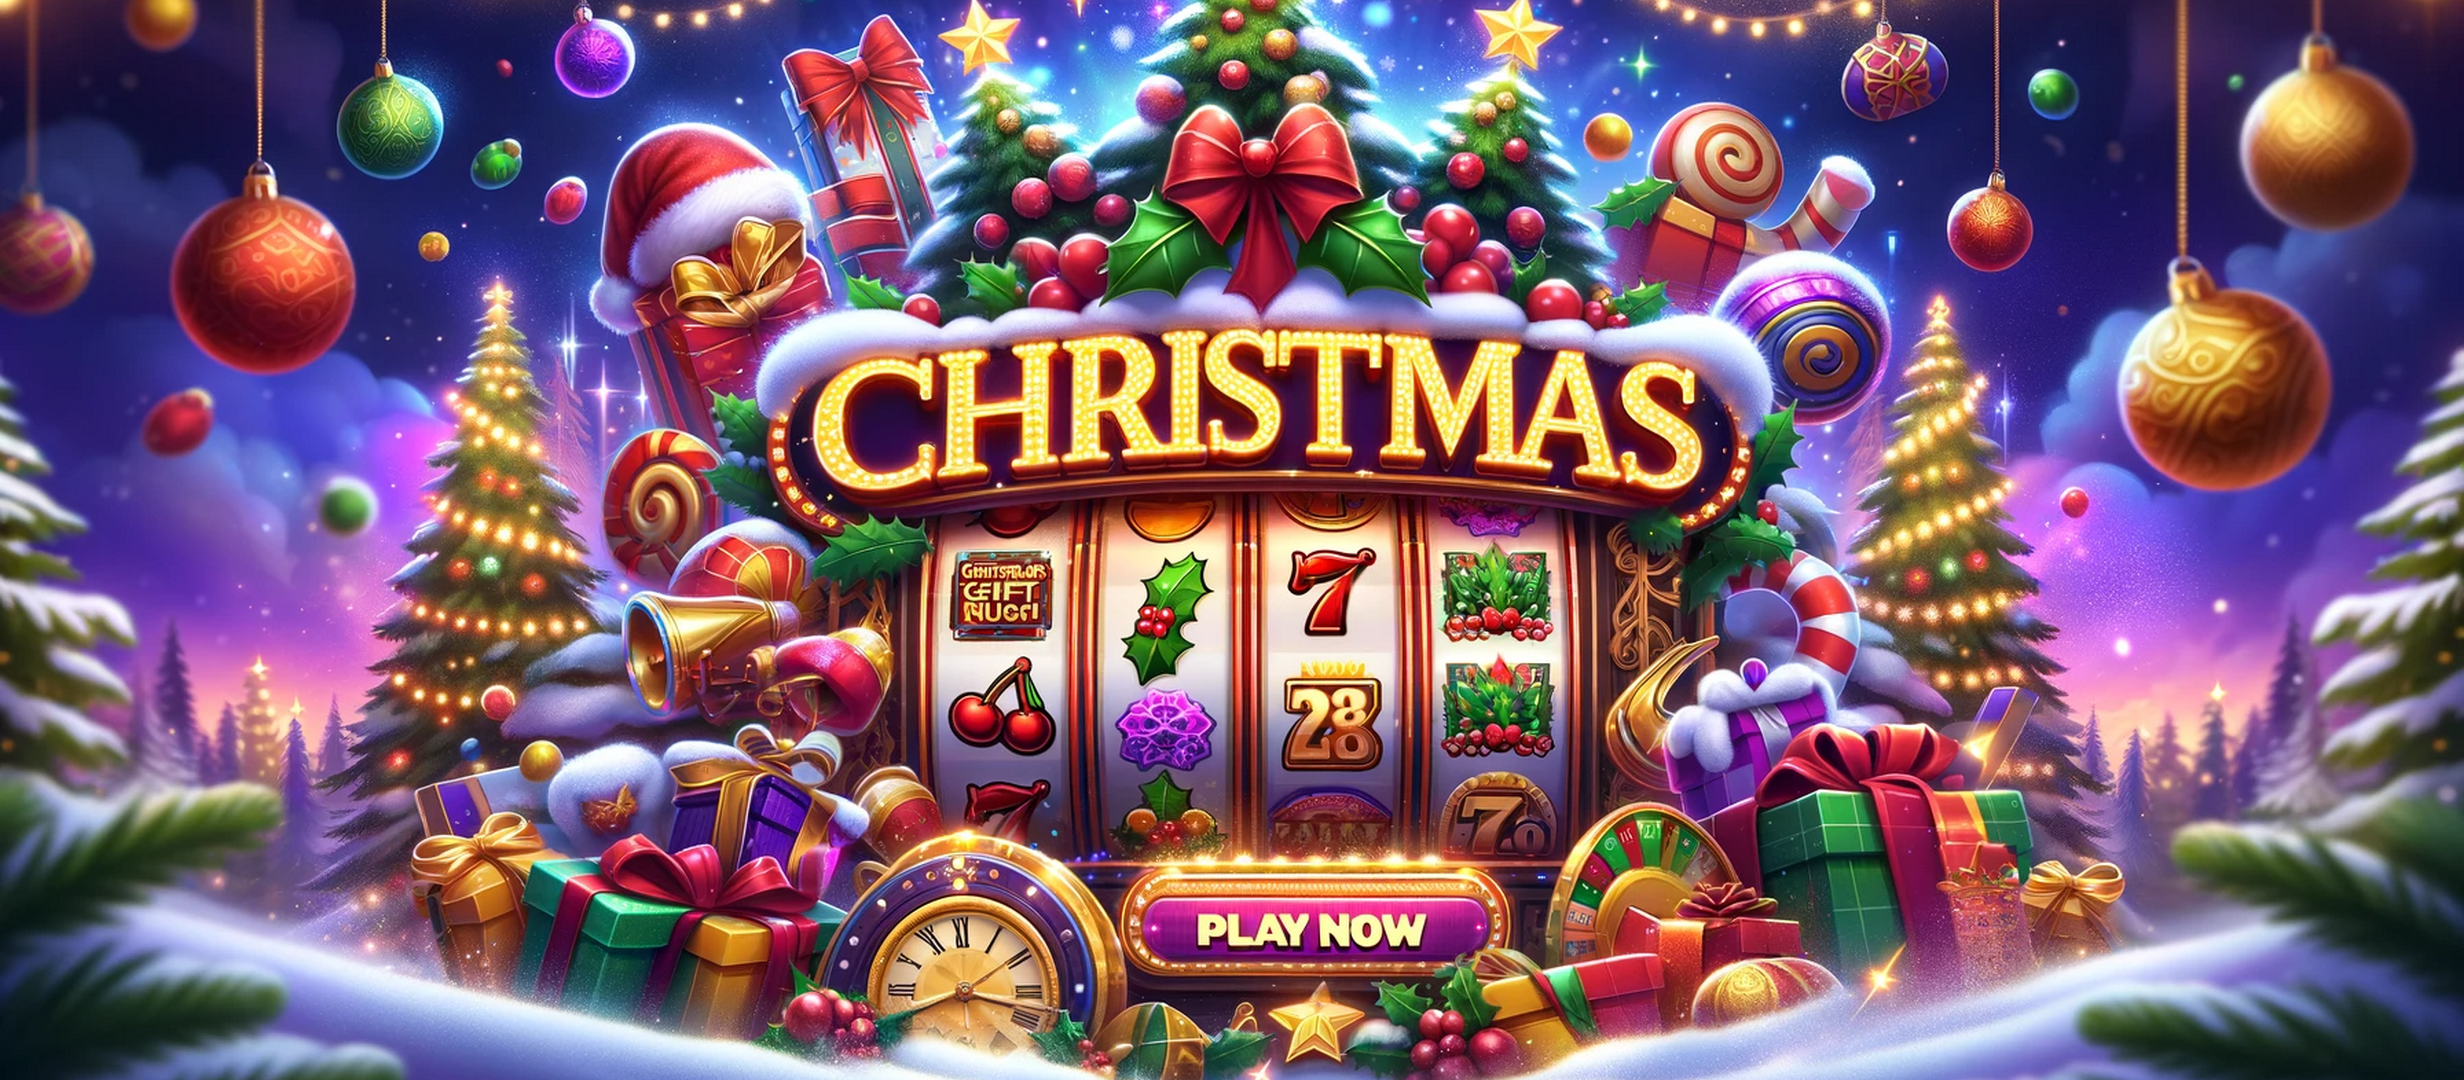 Slotul Christmas Gift Rush de la Mozzart Casino